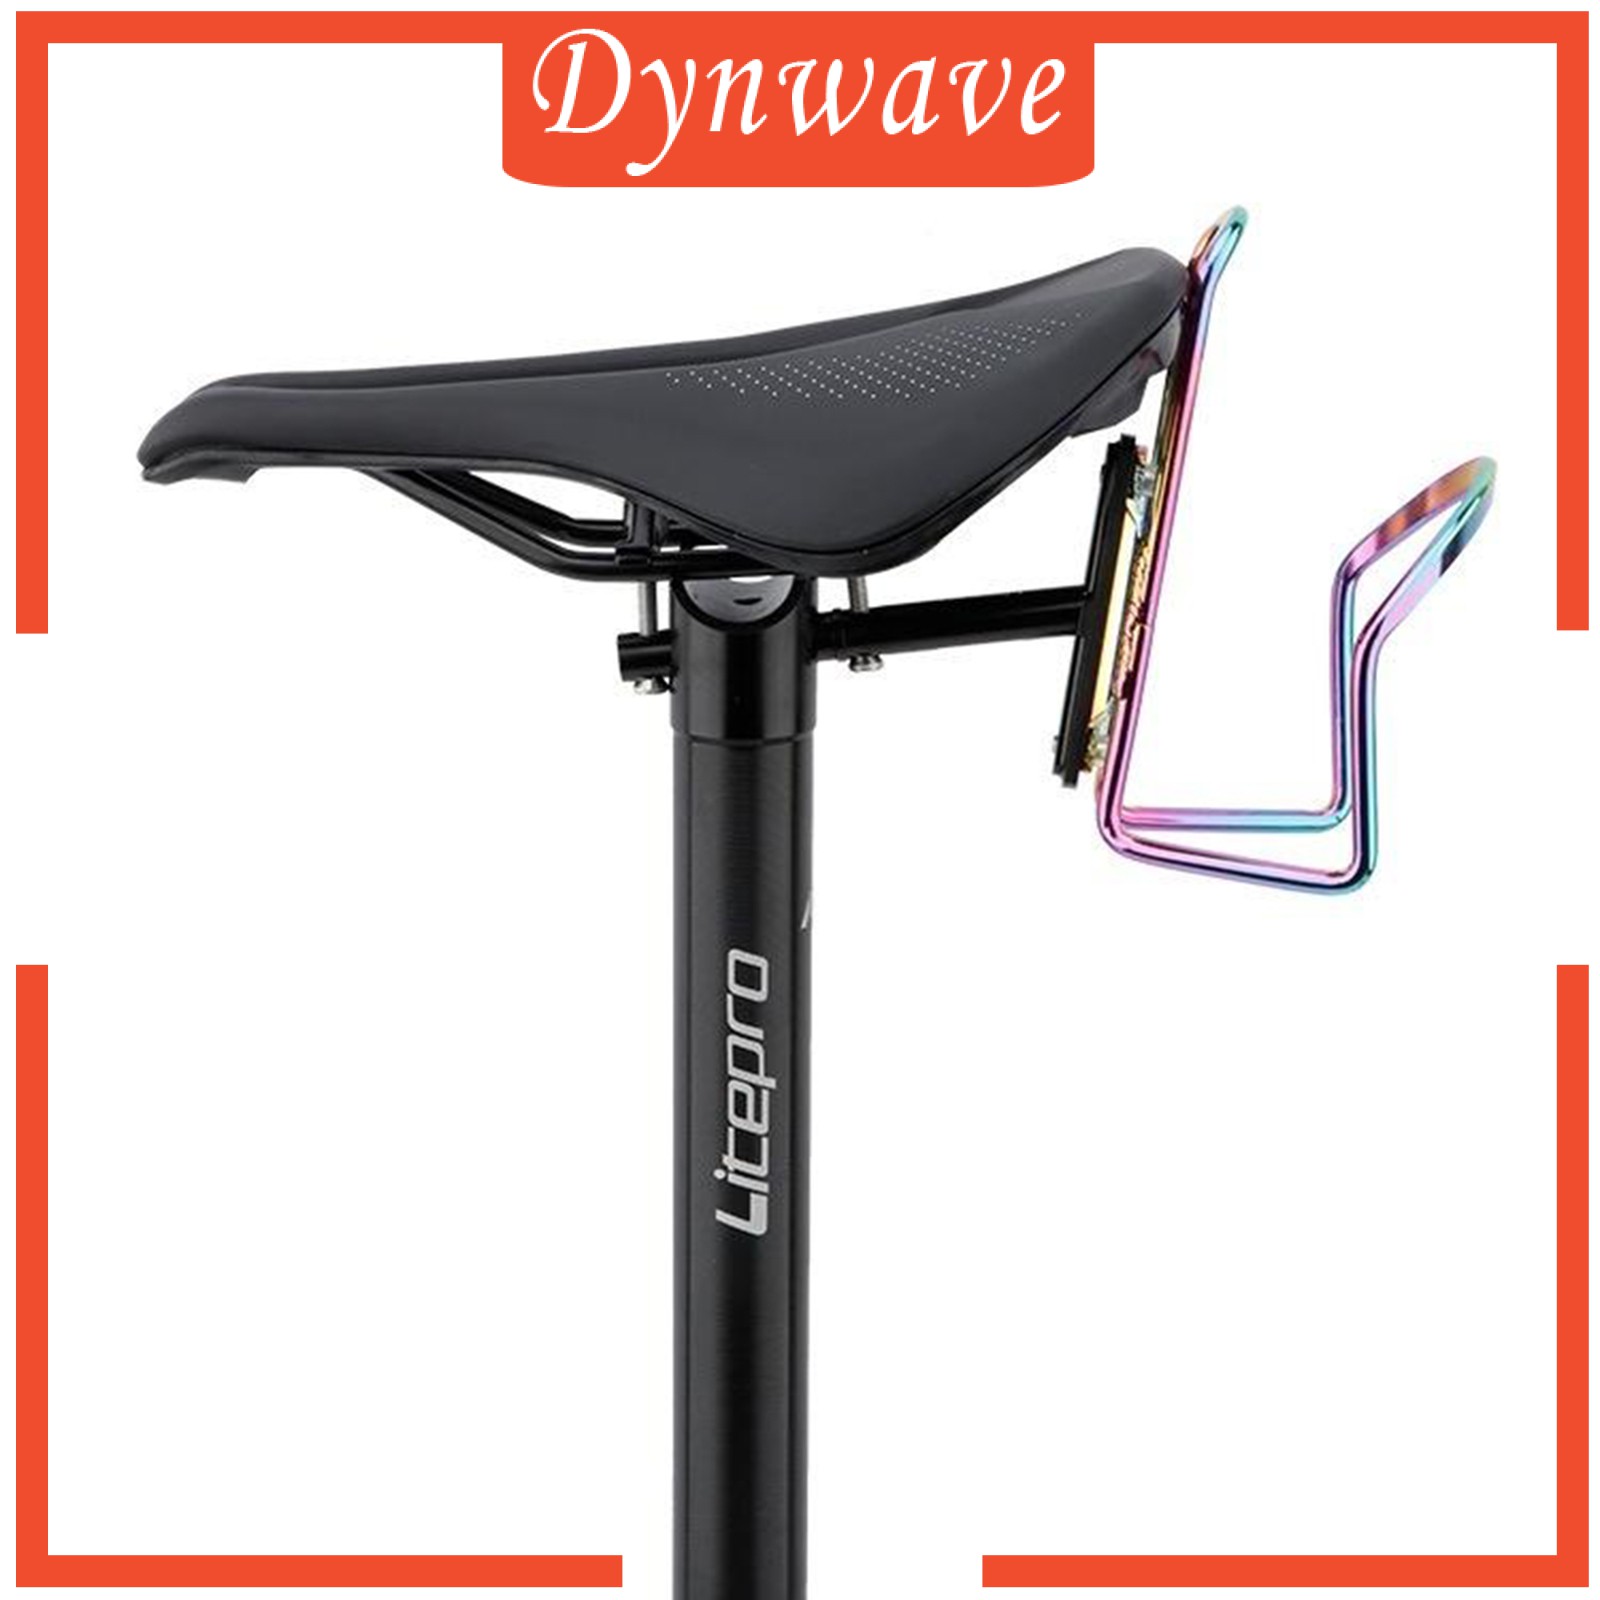 [DYNWAVE] Folding Bike Saddle Bicycle Cycle Bike Water Bottle Cage Mount Holders Adapter